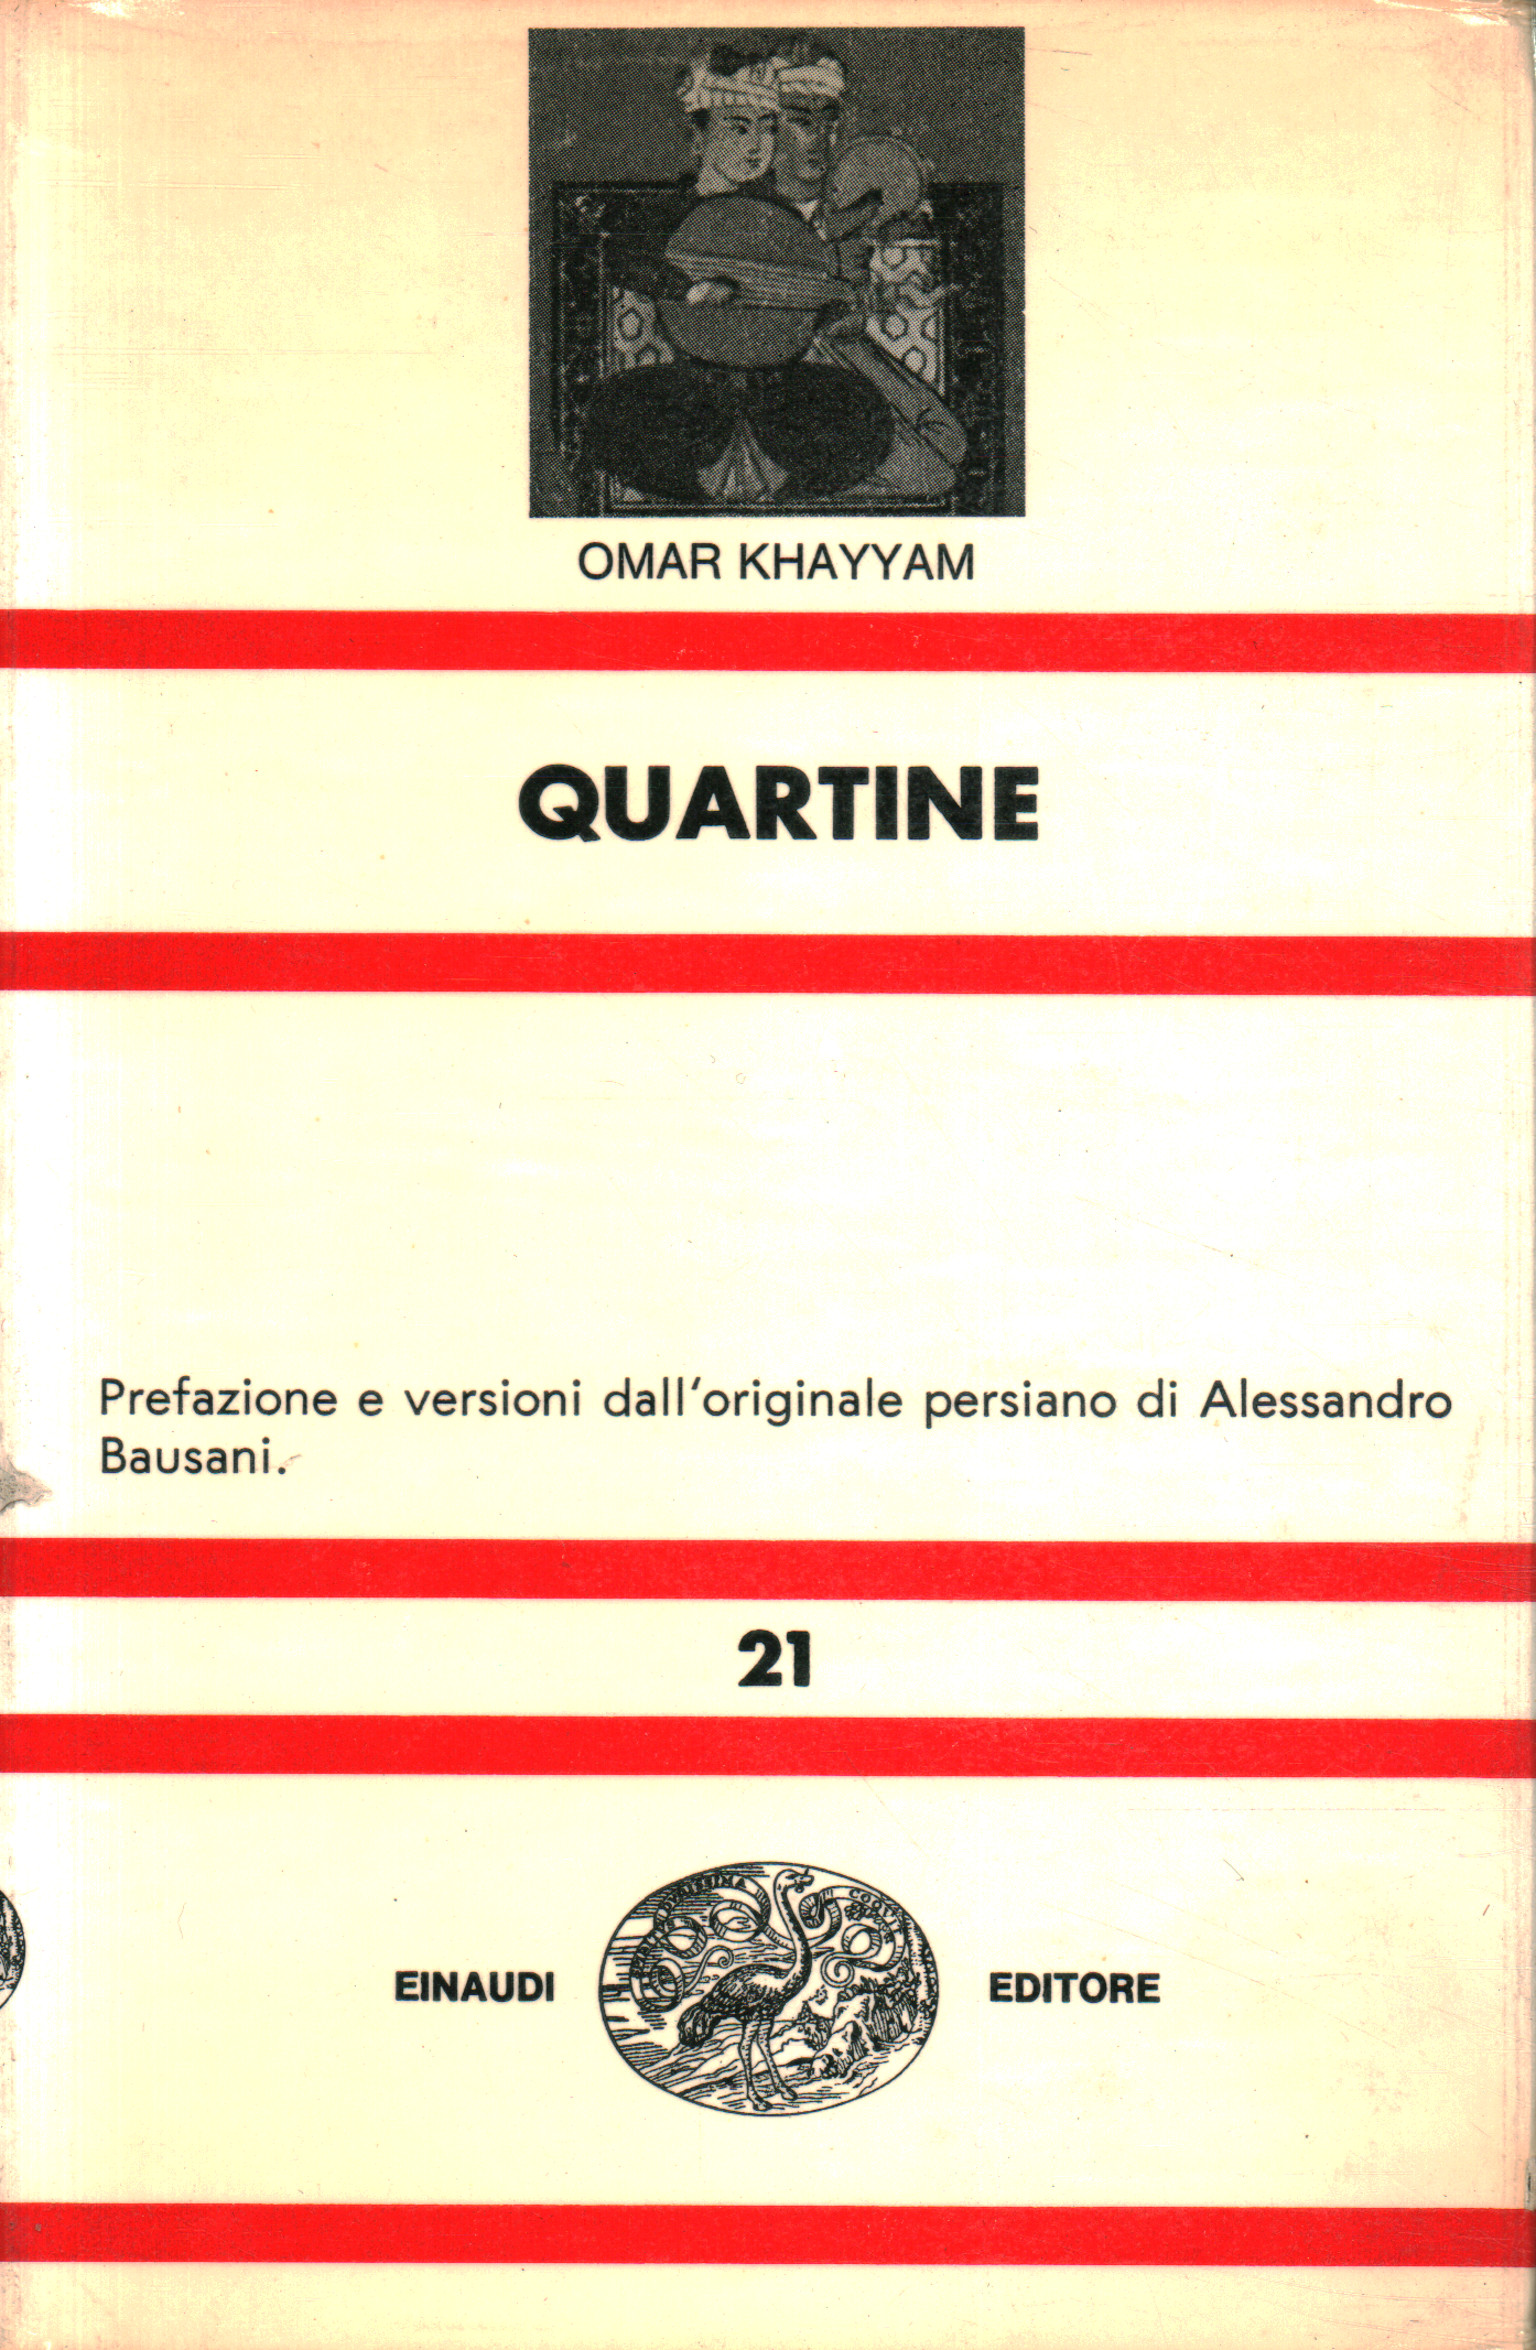 Quatrains